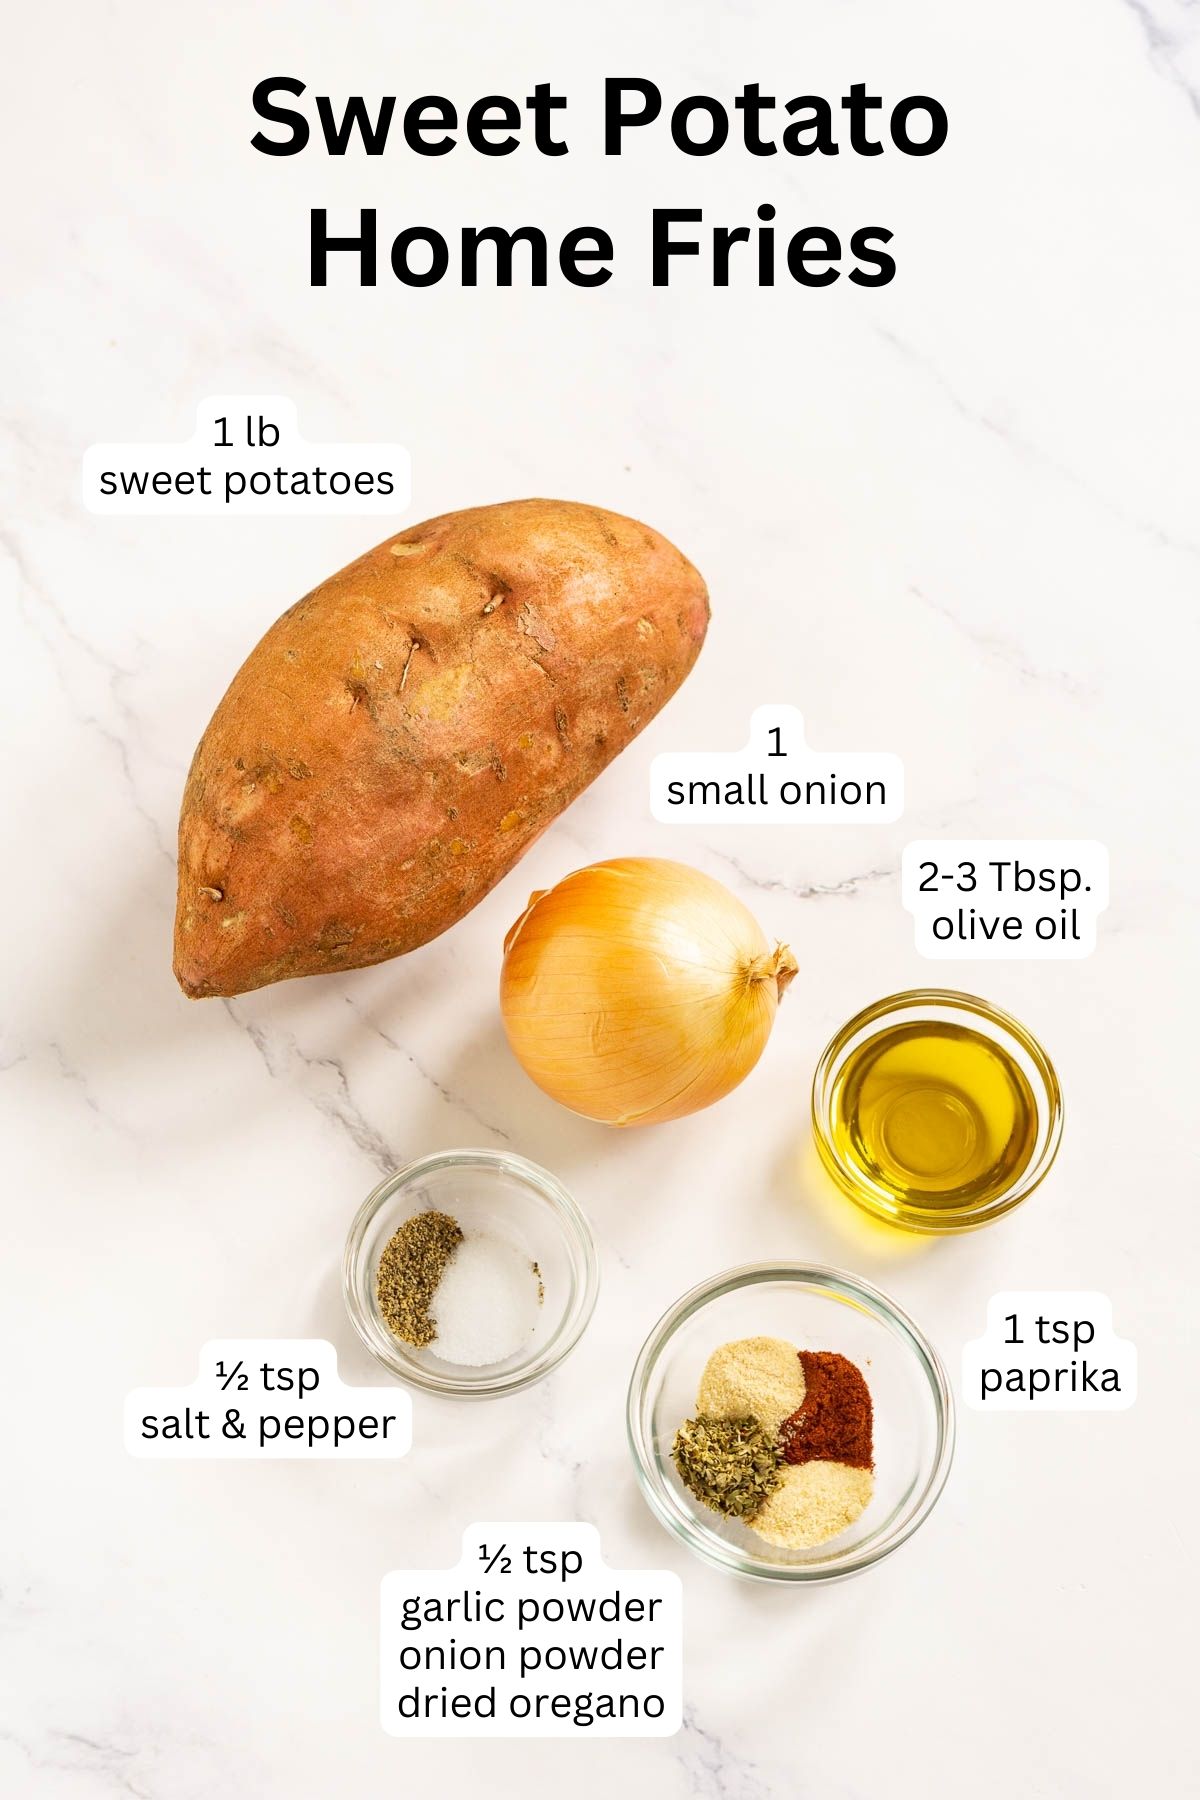 Ingredients to make sweet potato home fries